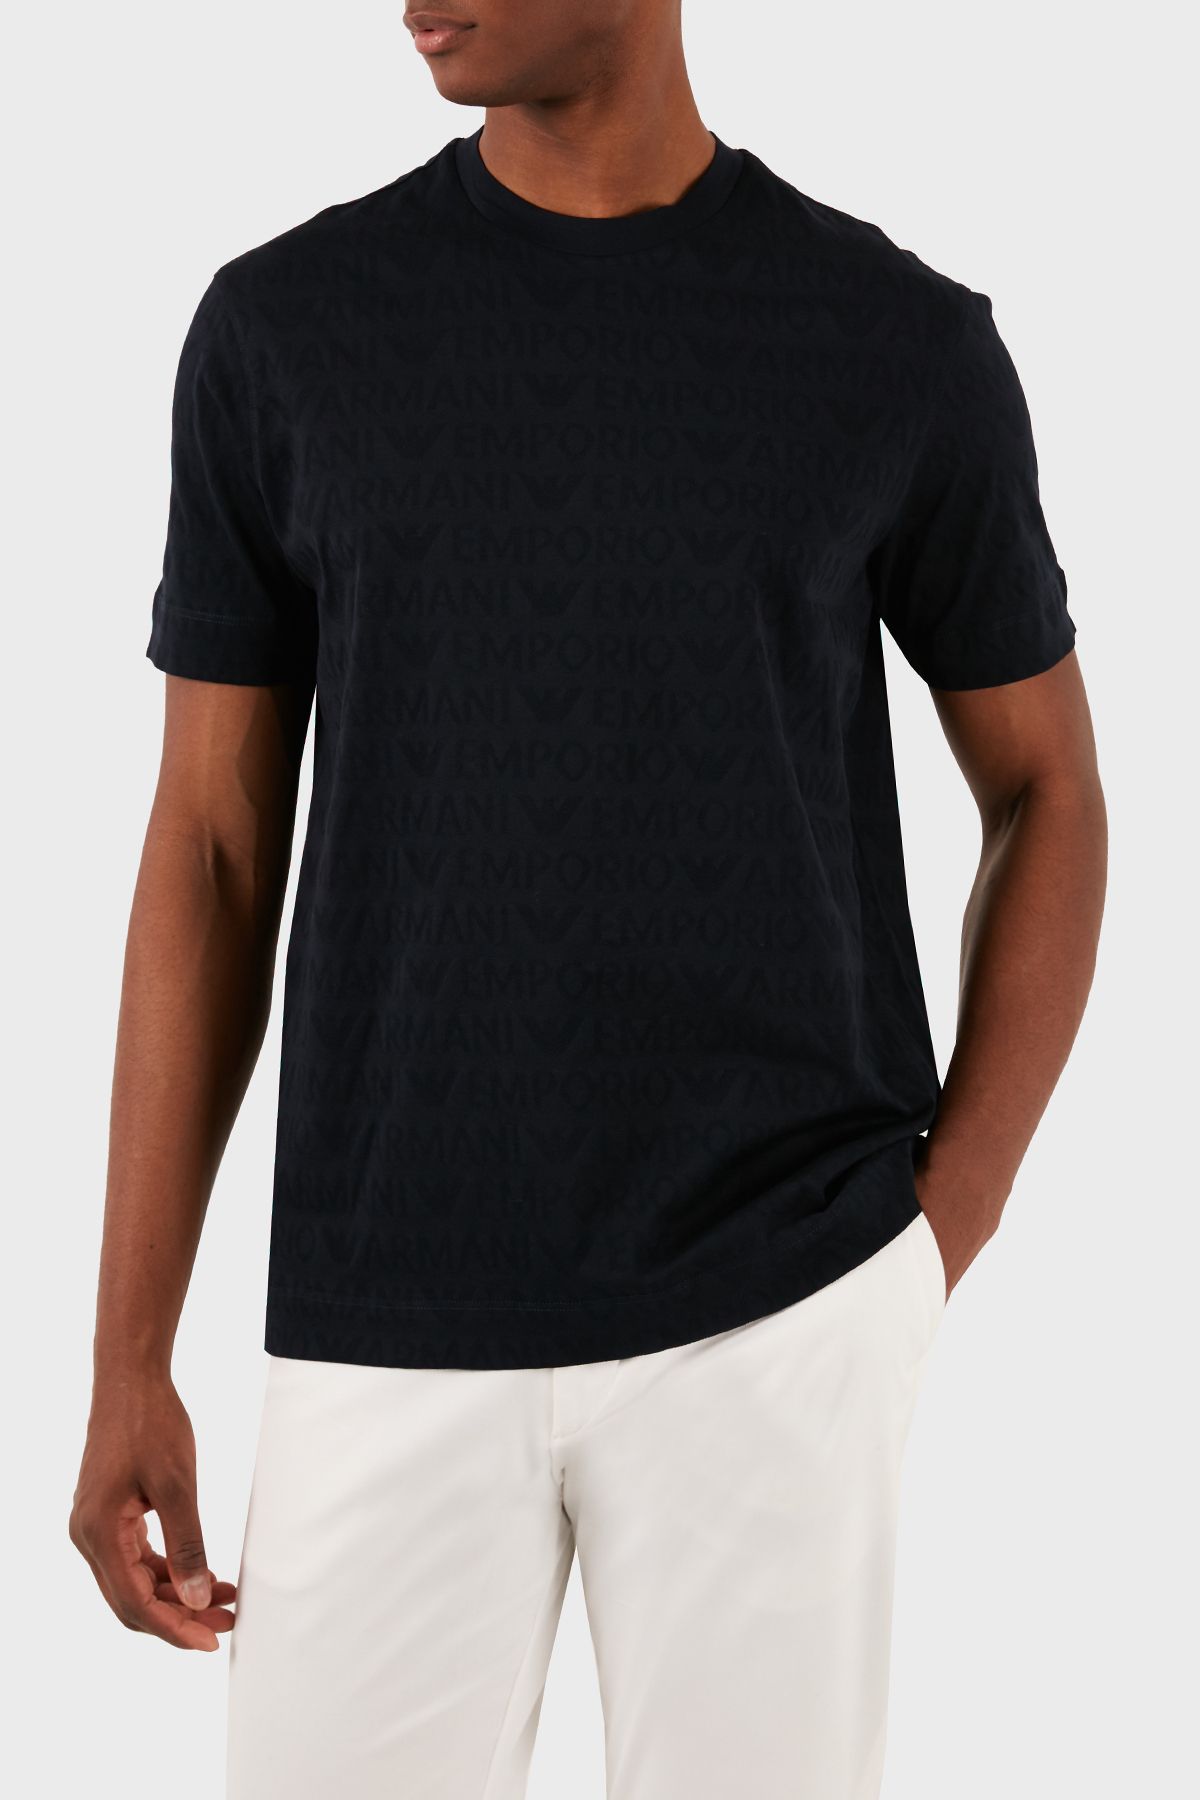 Emporio Armani Erkek Marka Logolu Organik Pamuklu Kısa Kollu Mavi T-Shirt 3D1TH5 1JORZ-0920